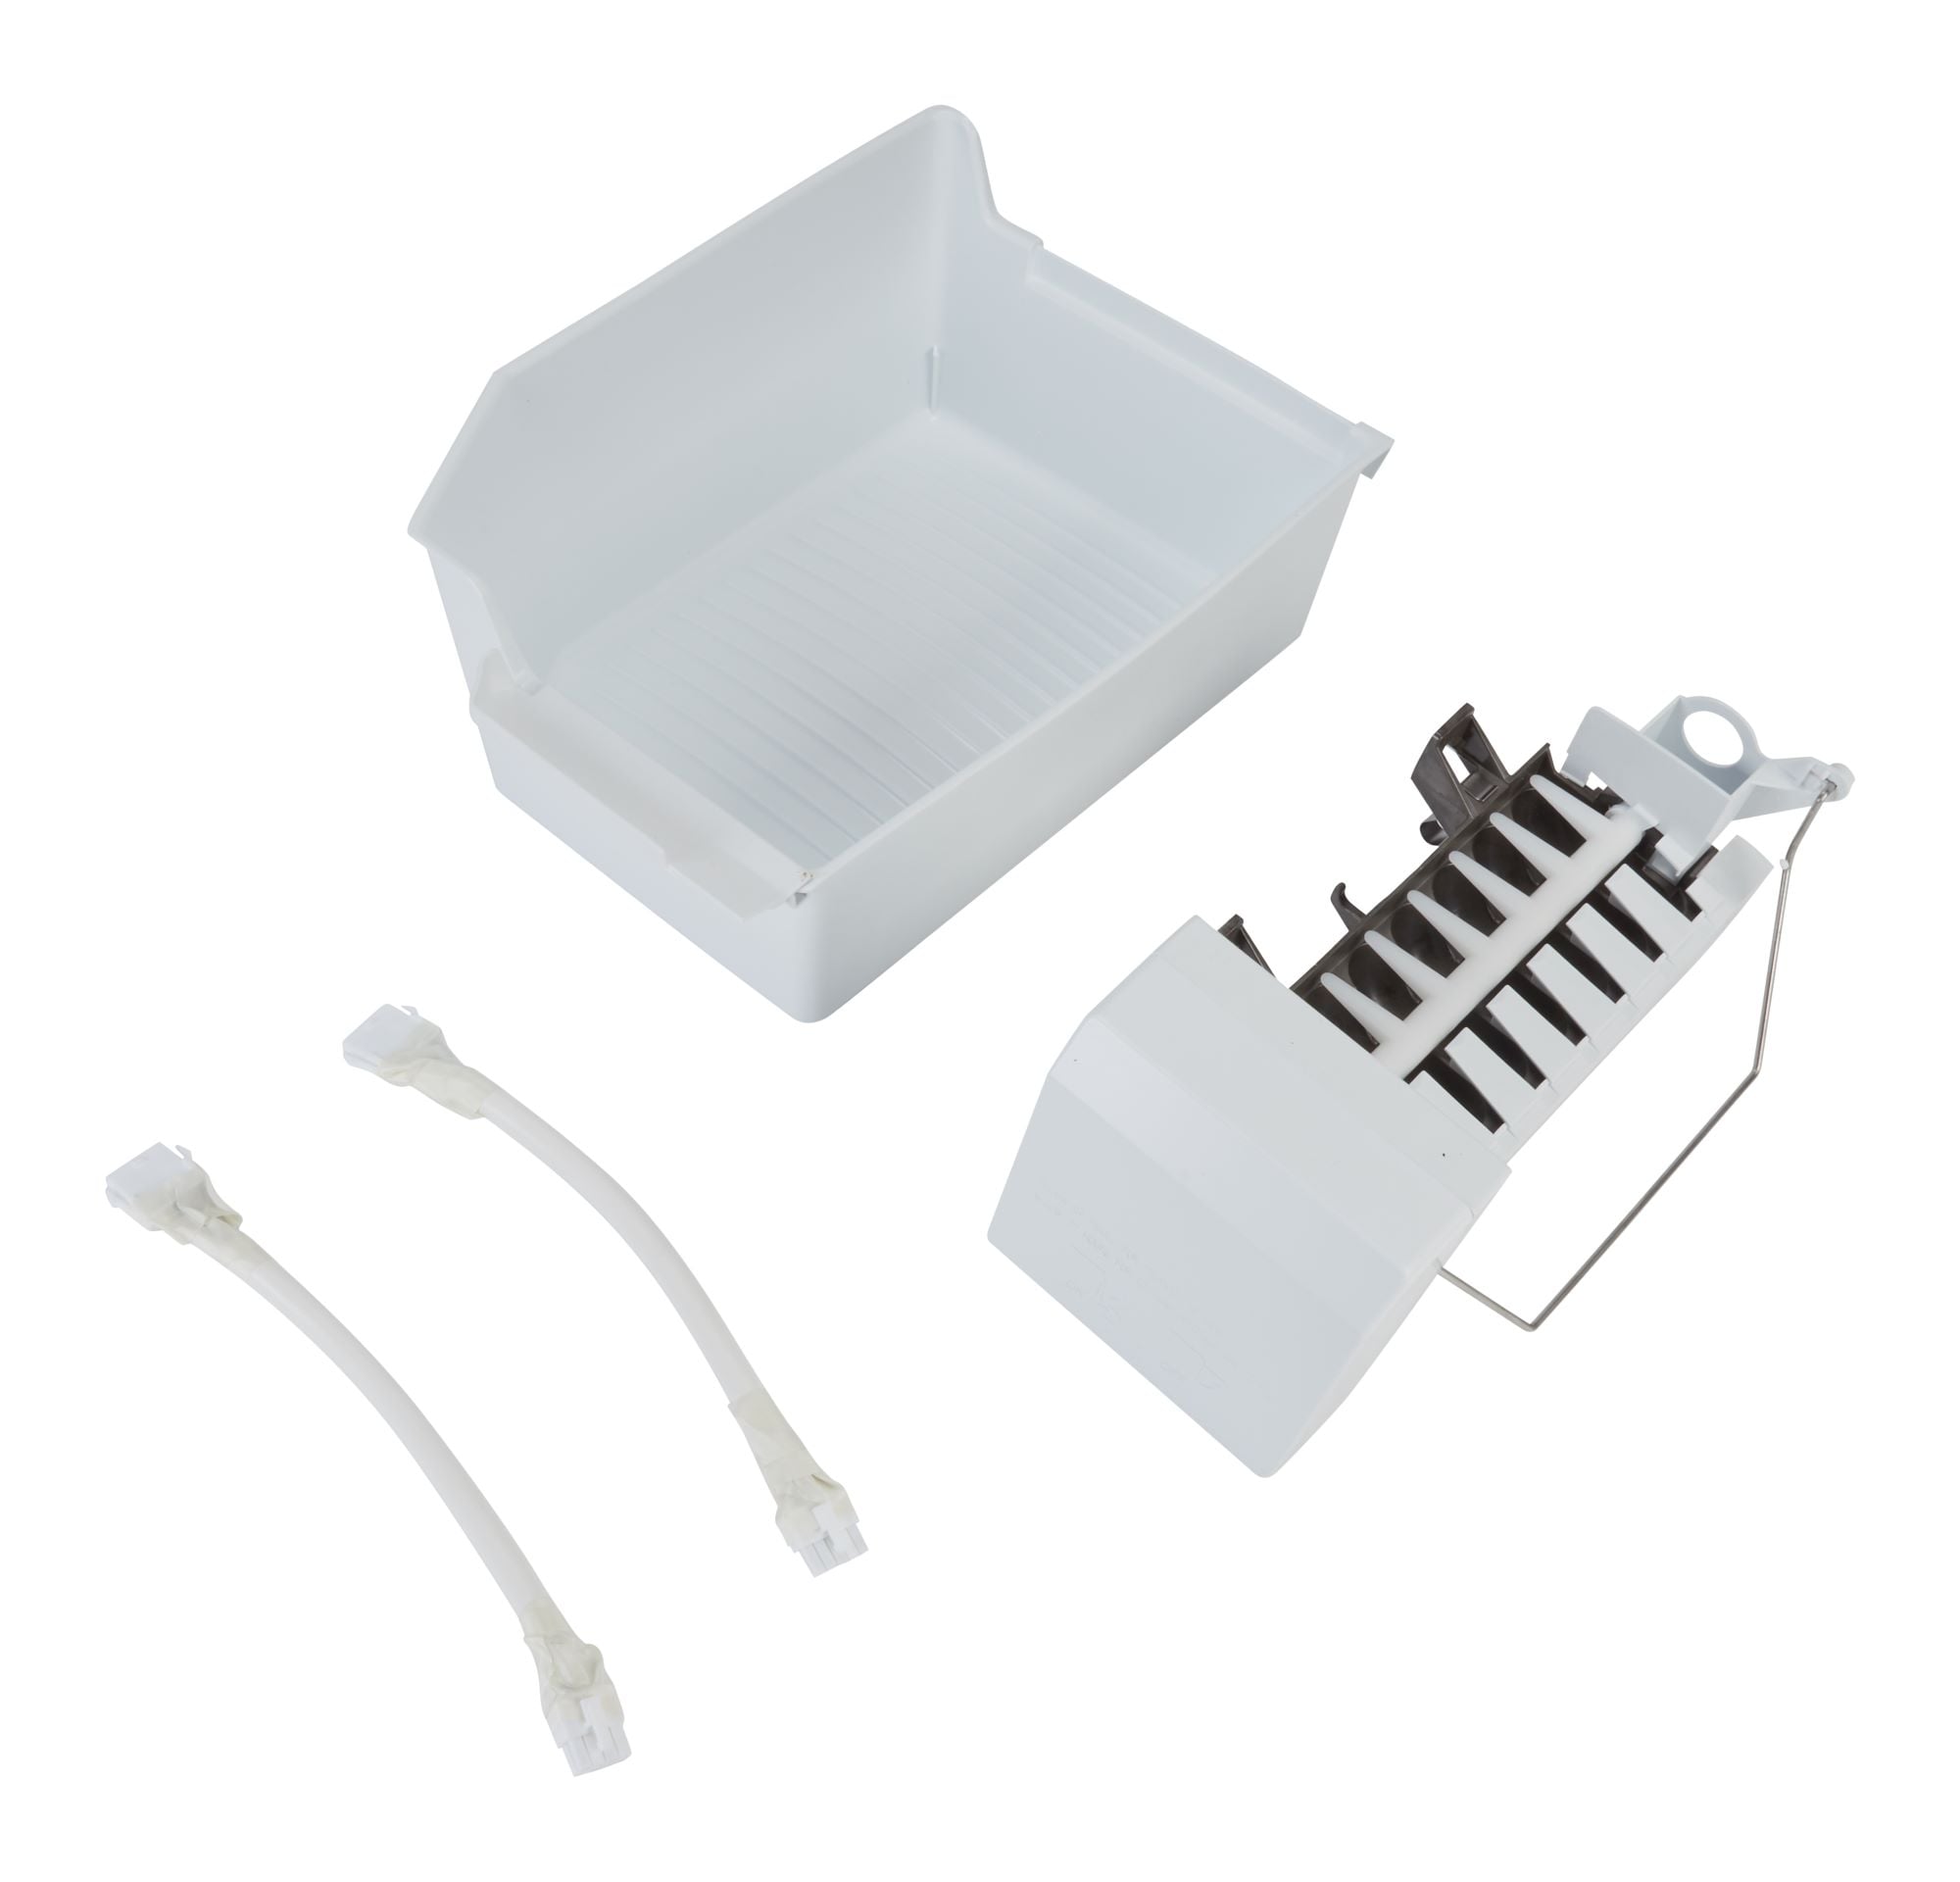 Whirlpool Corp WPW10715708 Refrigerator Ice Maker Kit